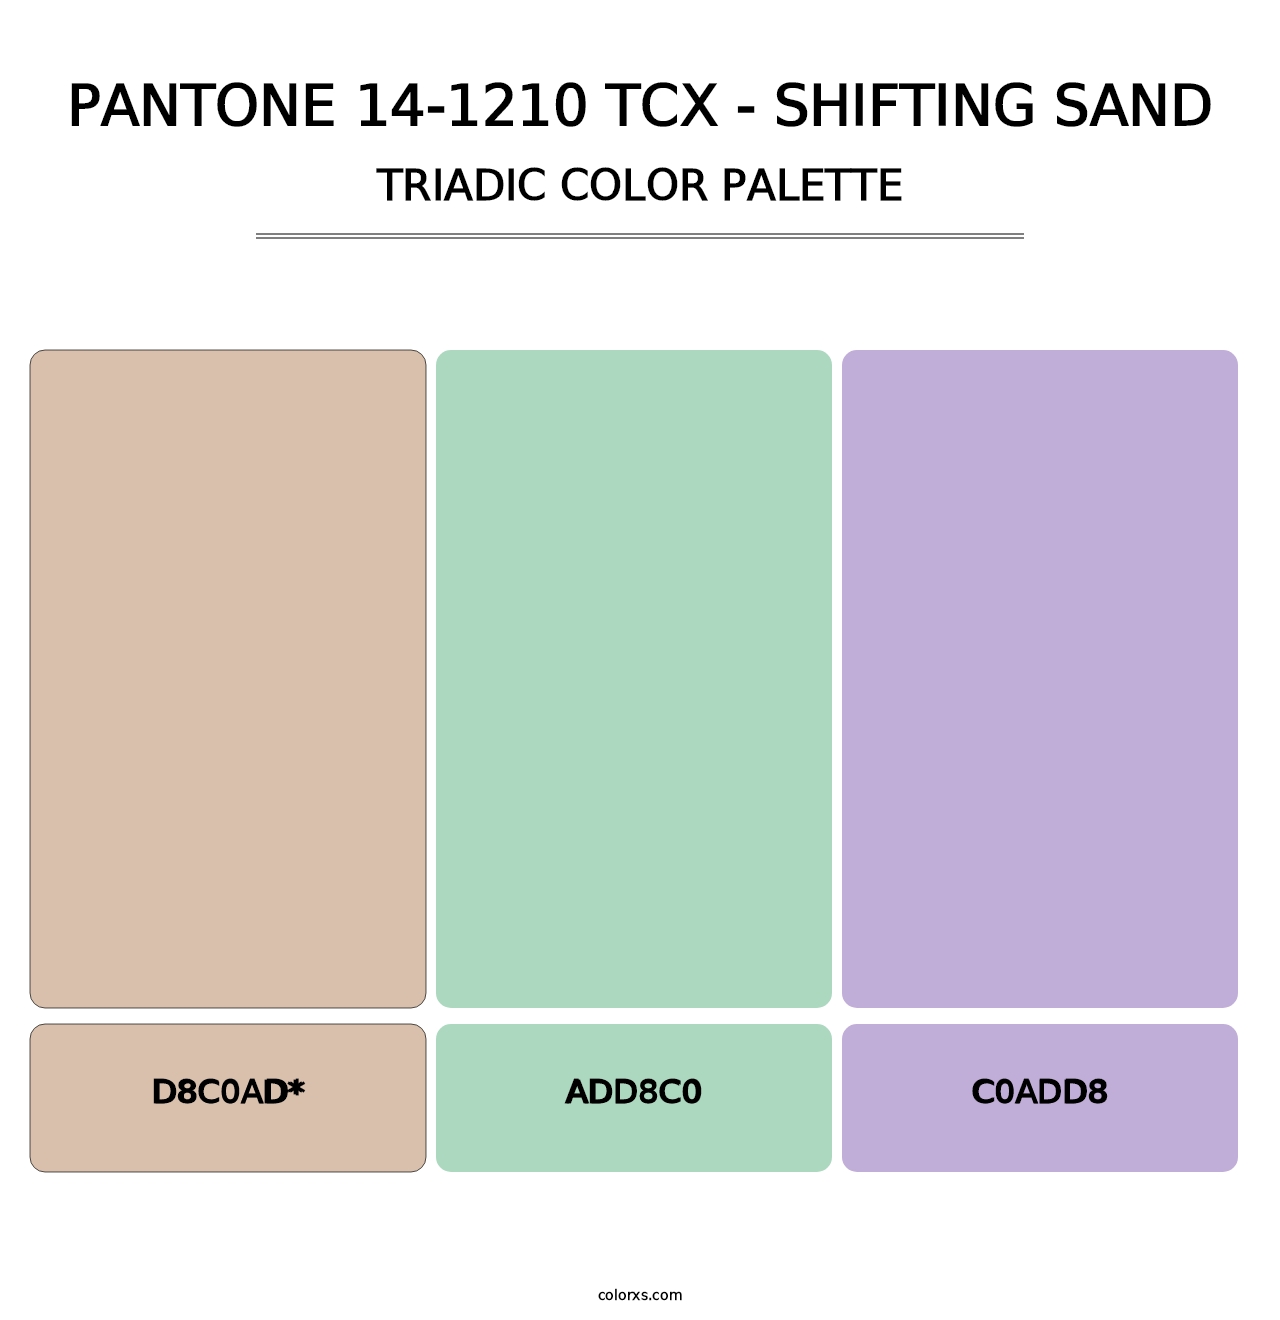 PANTONE 14-1210 TCX - Shifting Sand - Triadic Color Palette